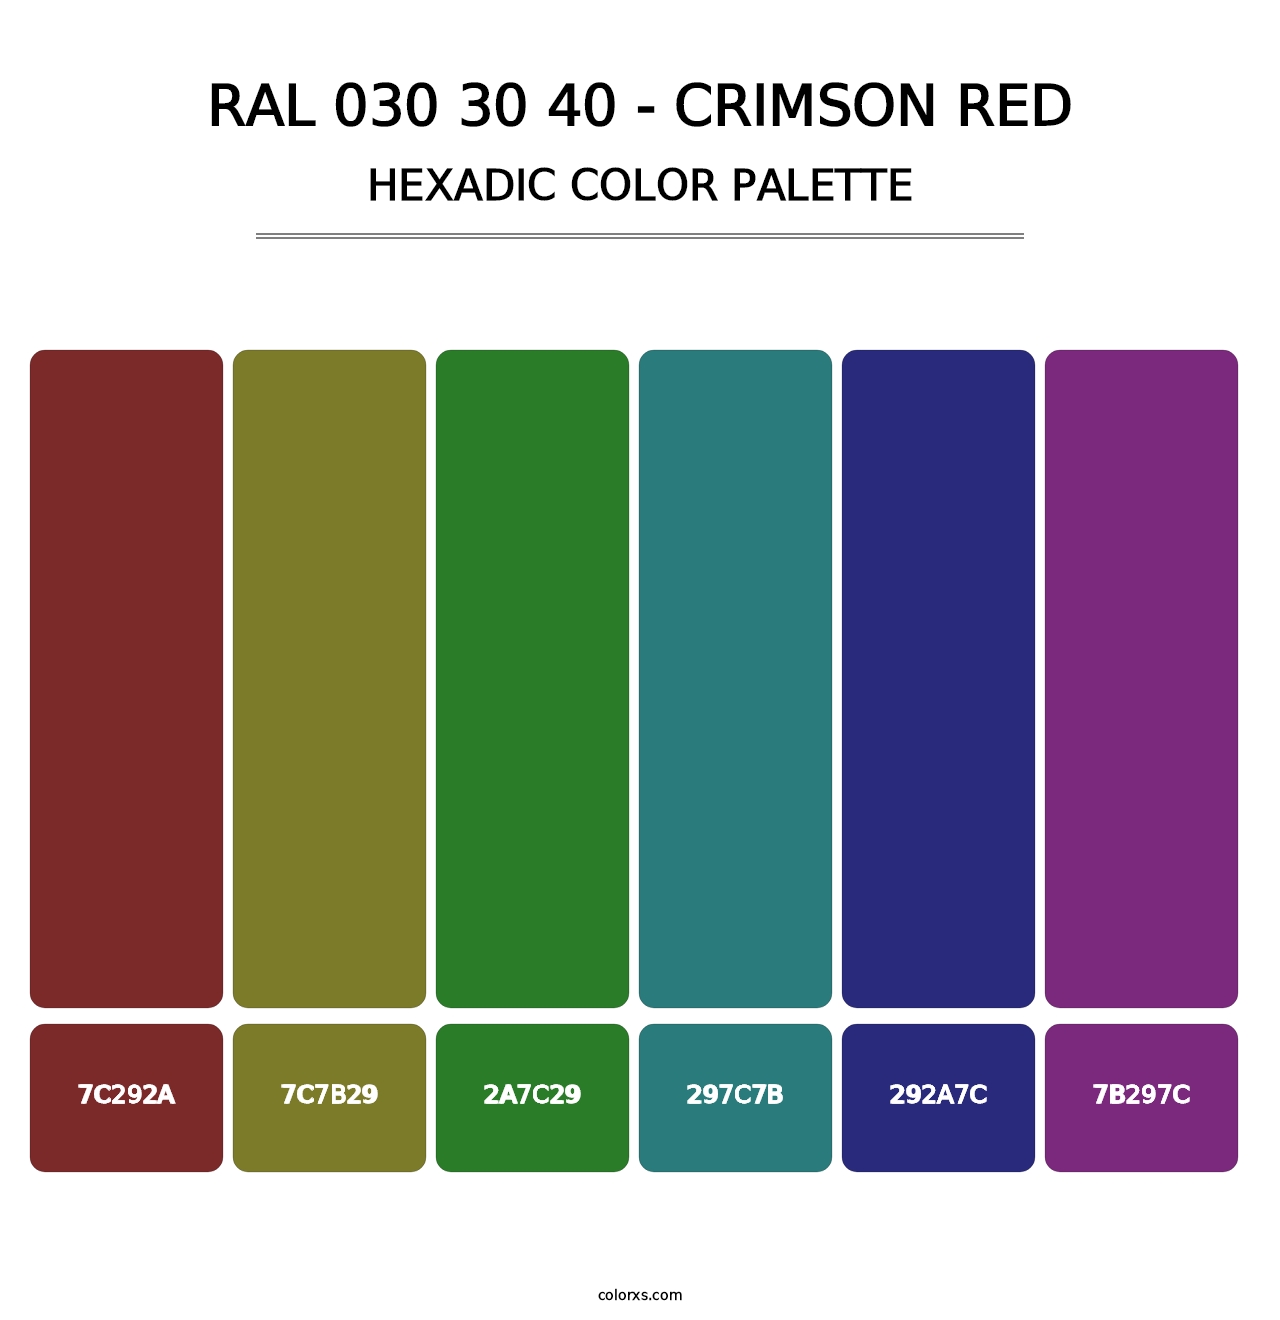 RAL 030 30 40 - Crimson Red - Hexadic Color Palette